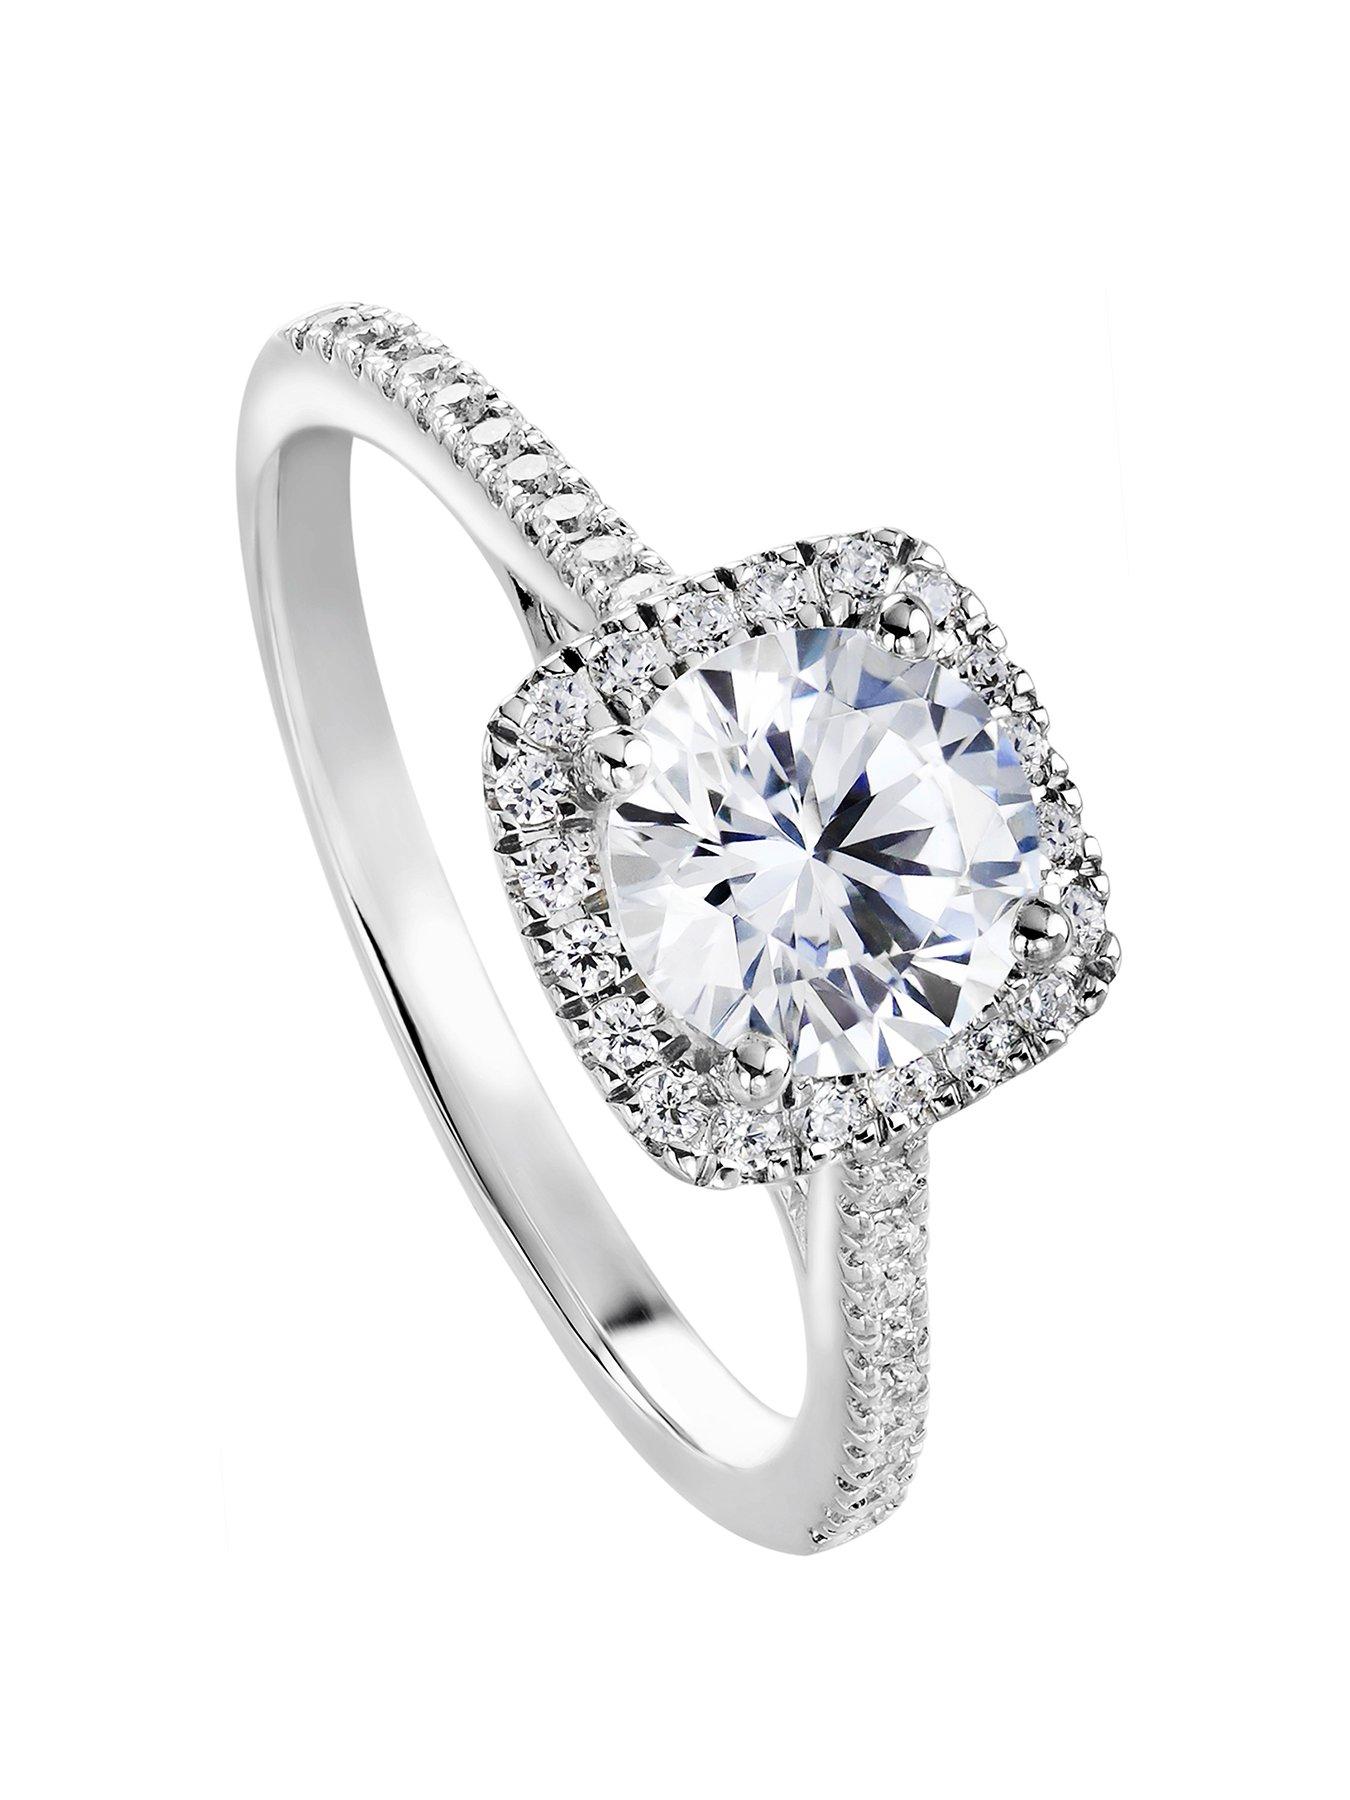 Details about   U Shaped Engagement Ring 0.20ct Diamond U Shaped Ring White Gold Wedding Jewelry 